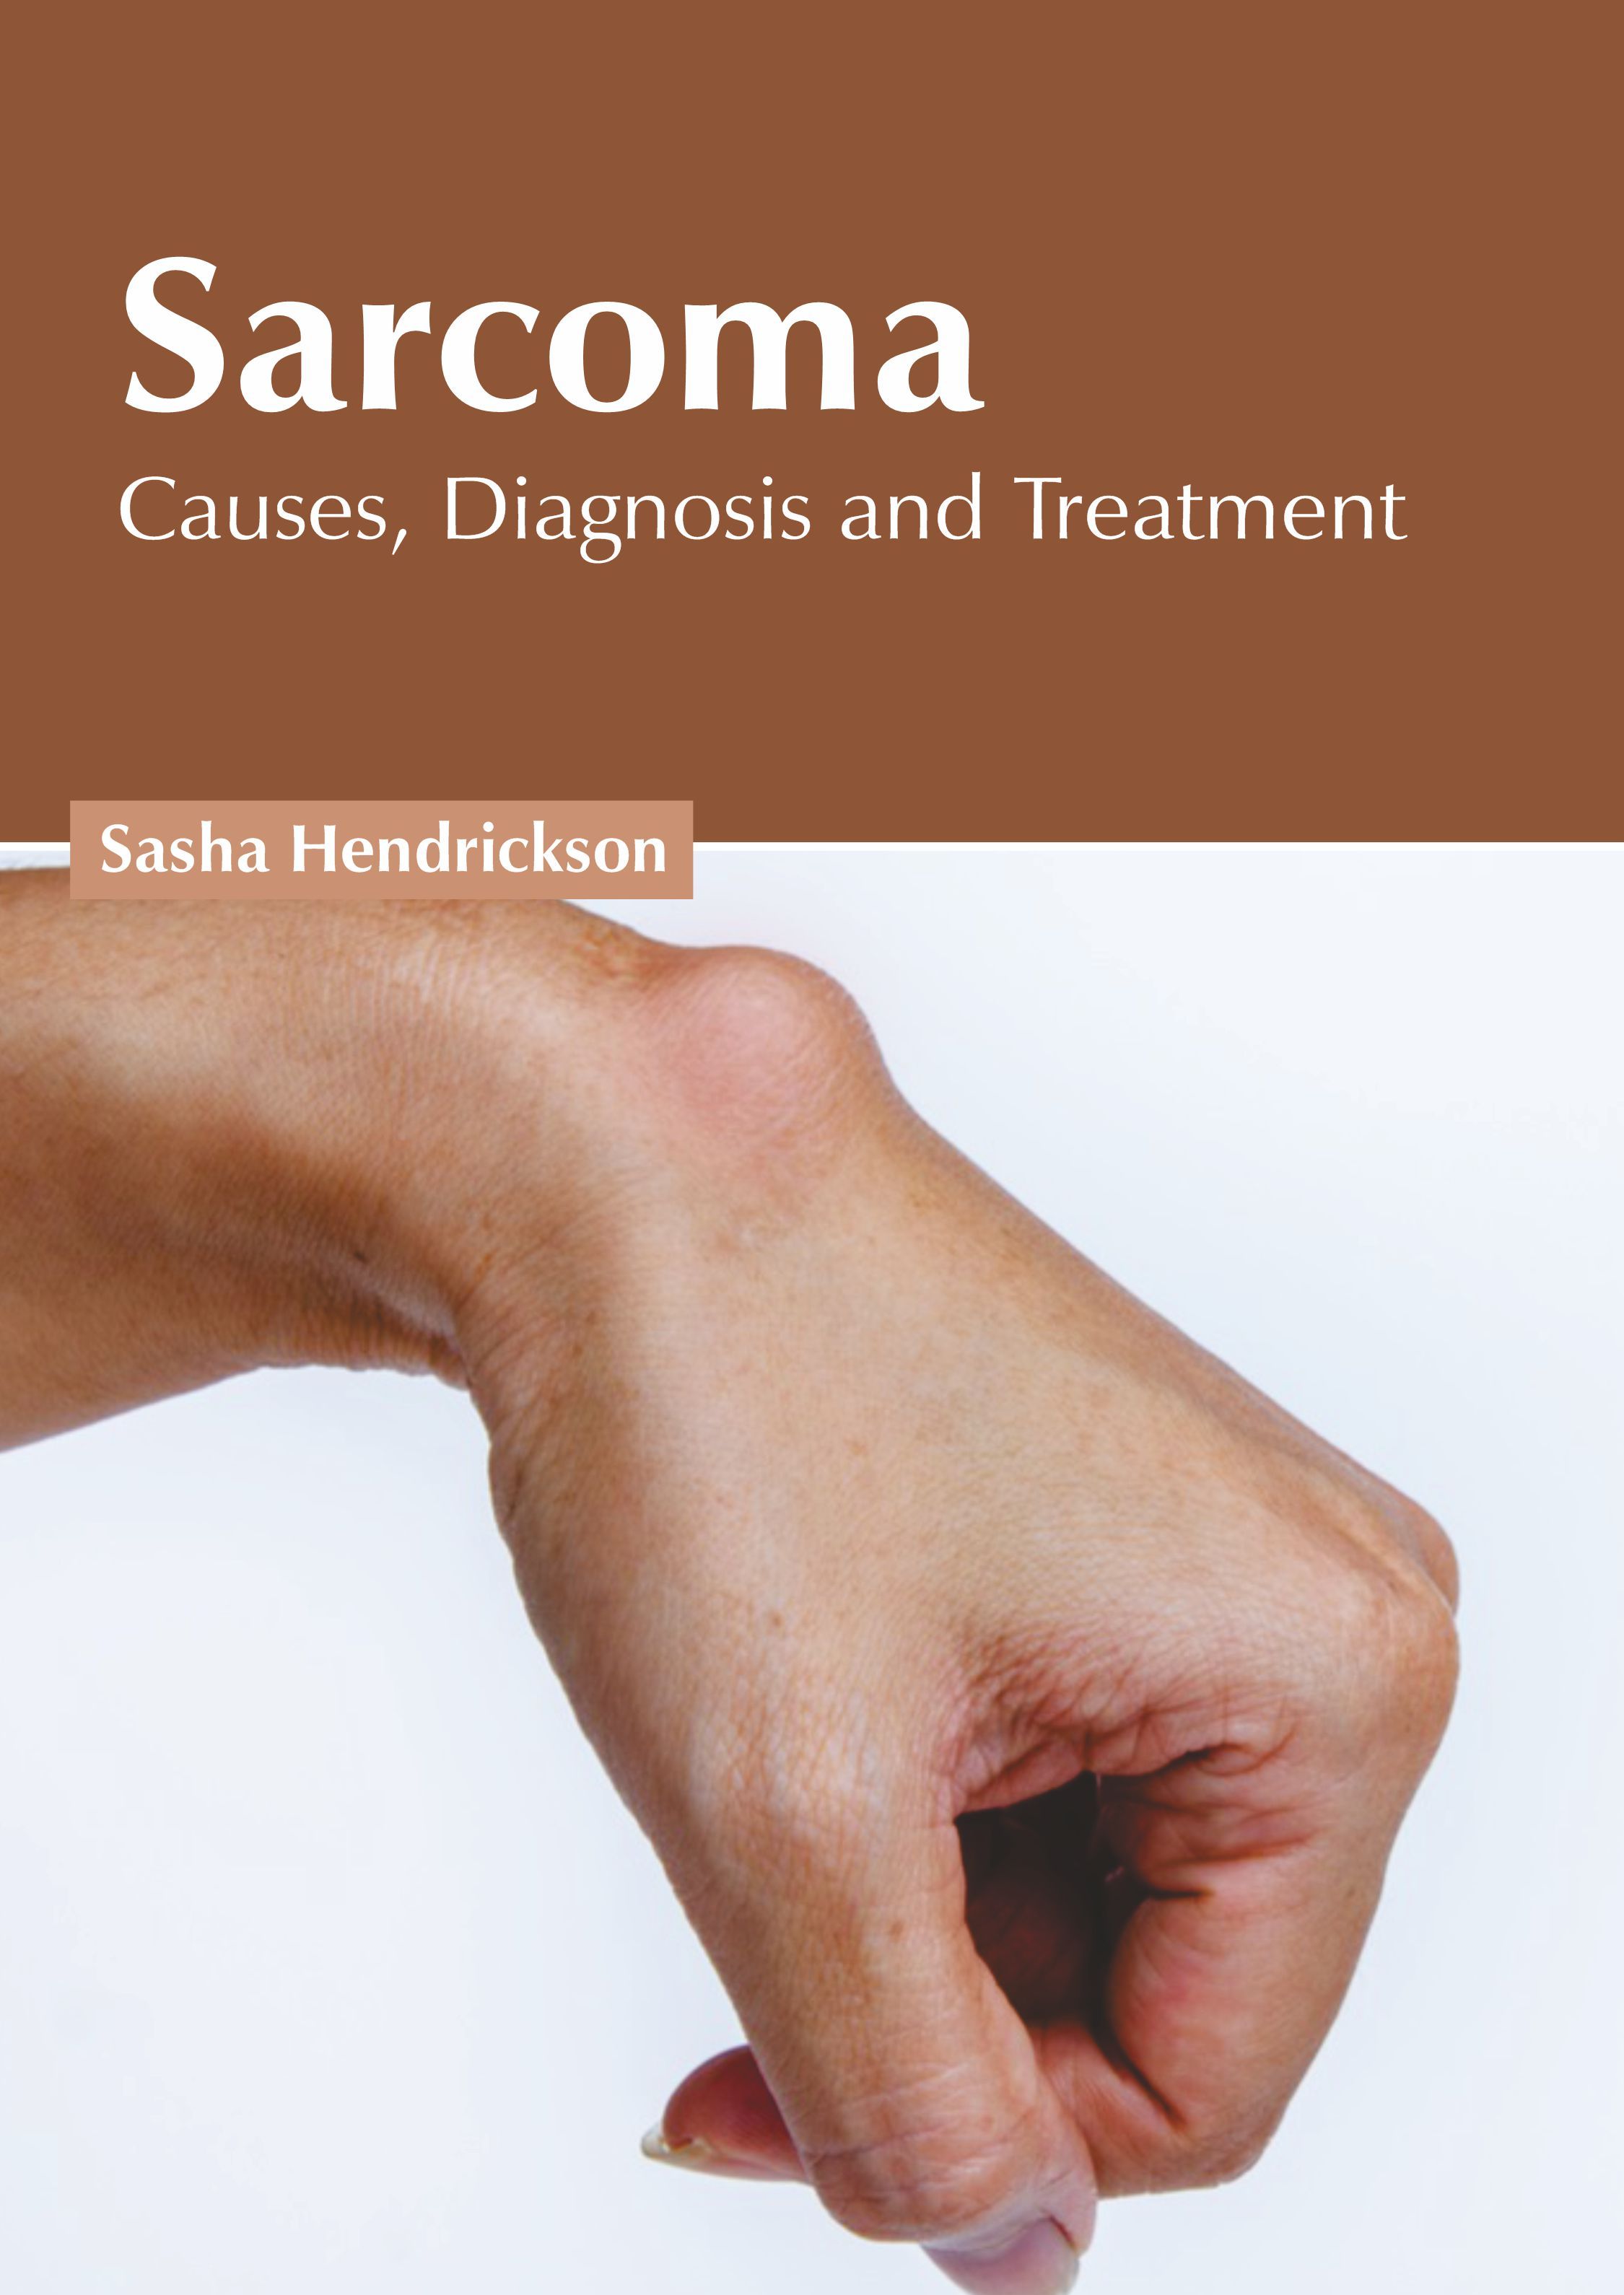 SARCOMA: CAUSES, DIAGNOSIS AND TREATMENT